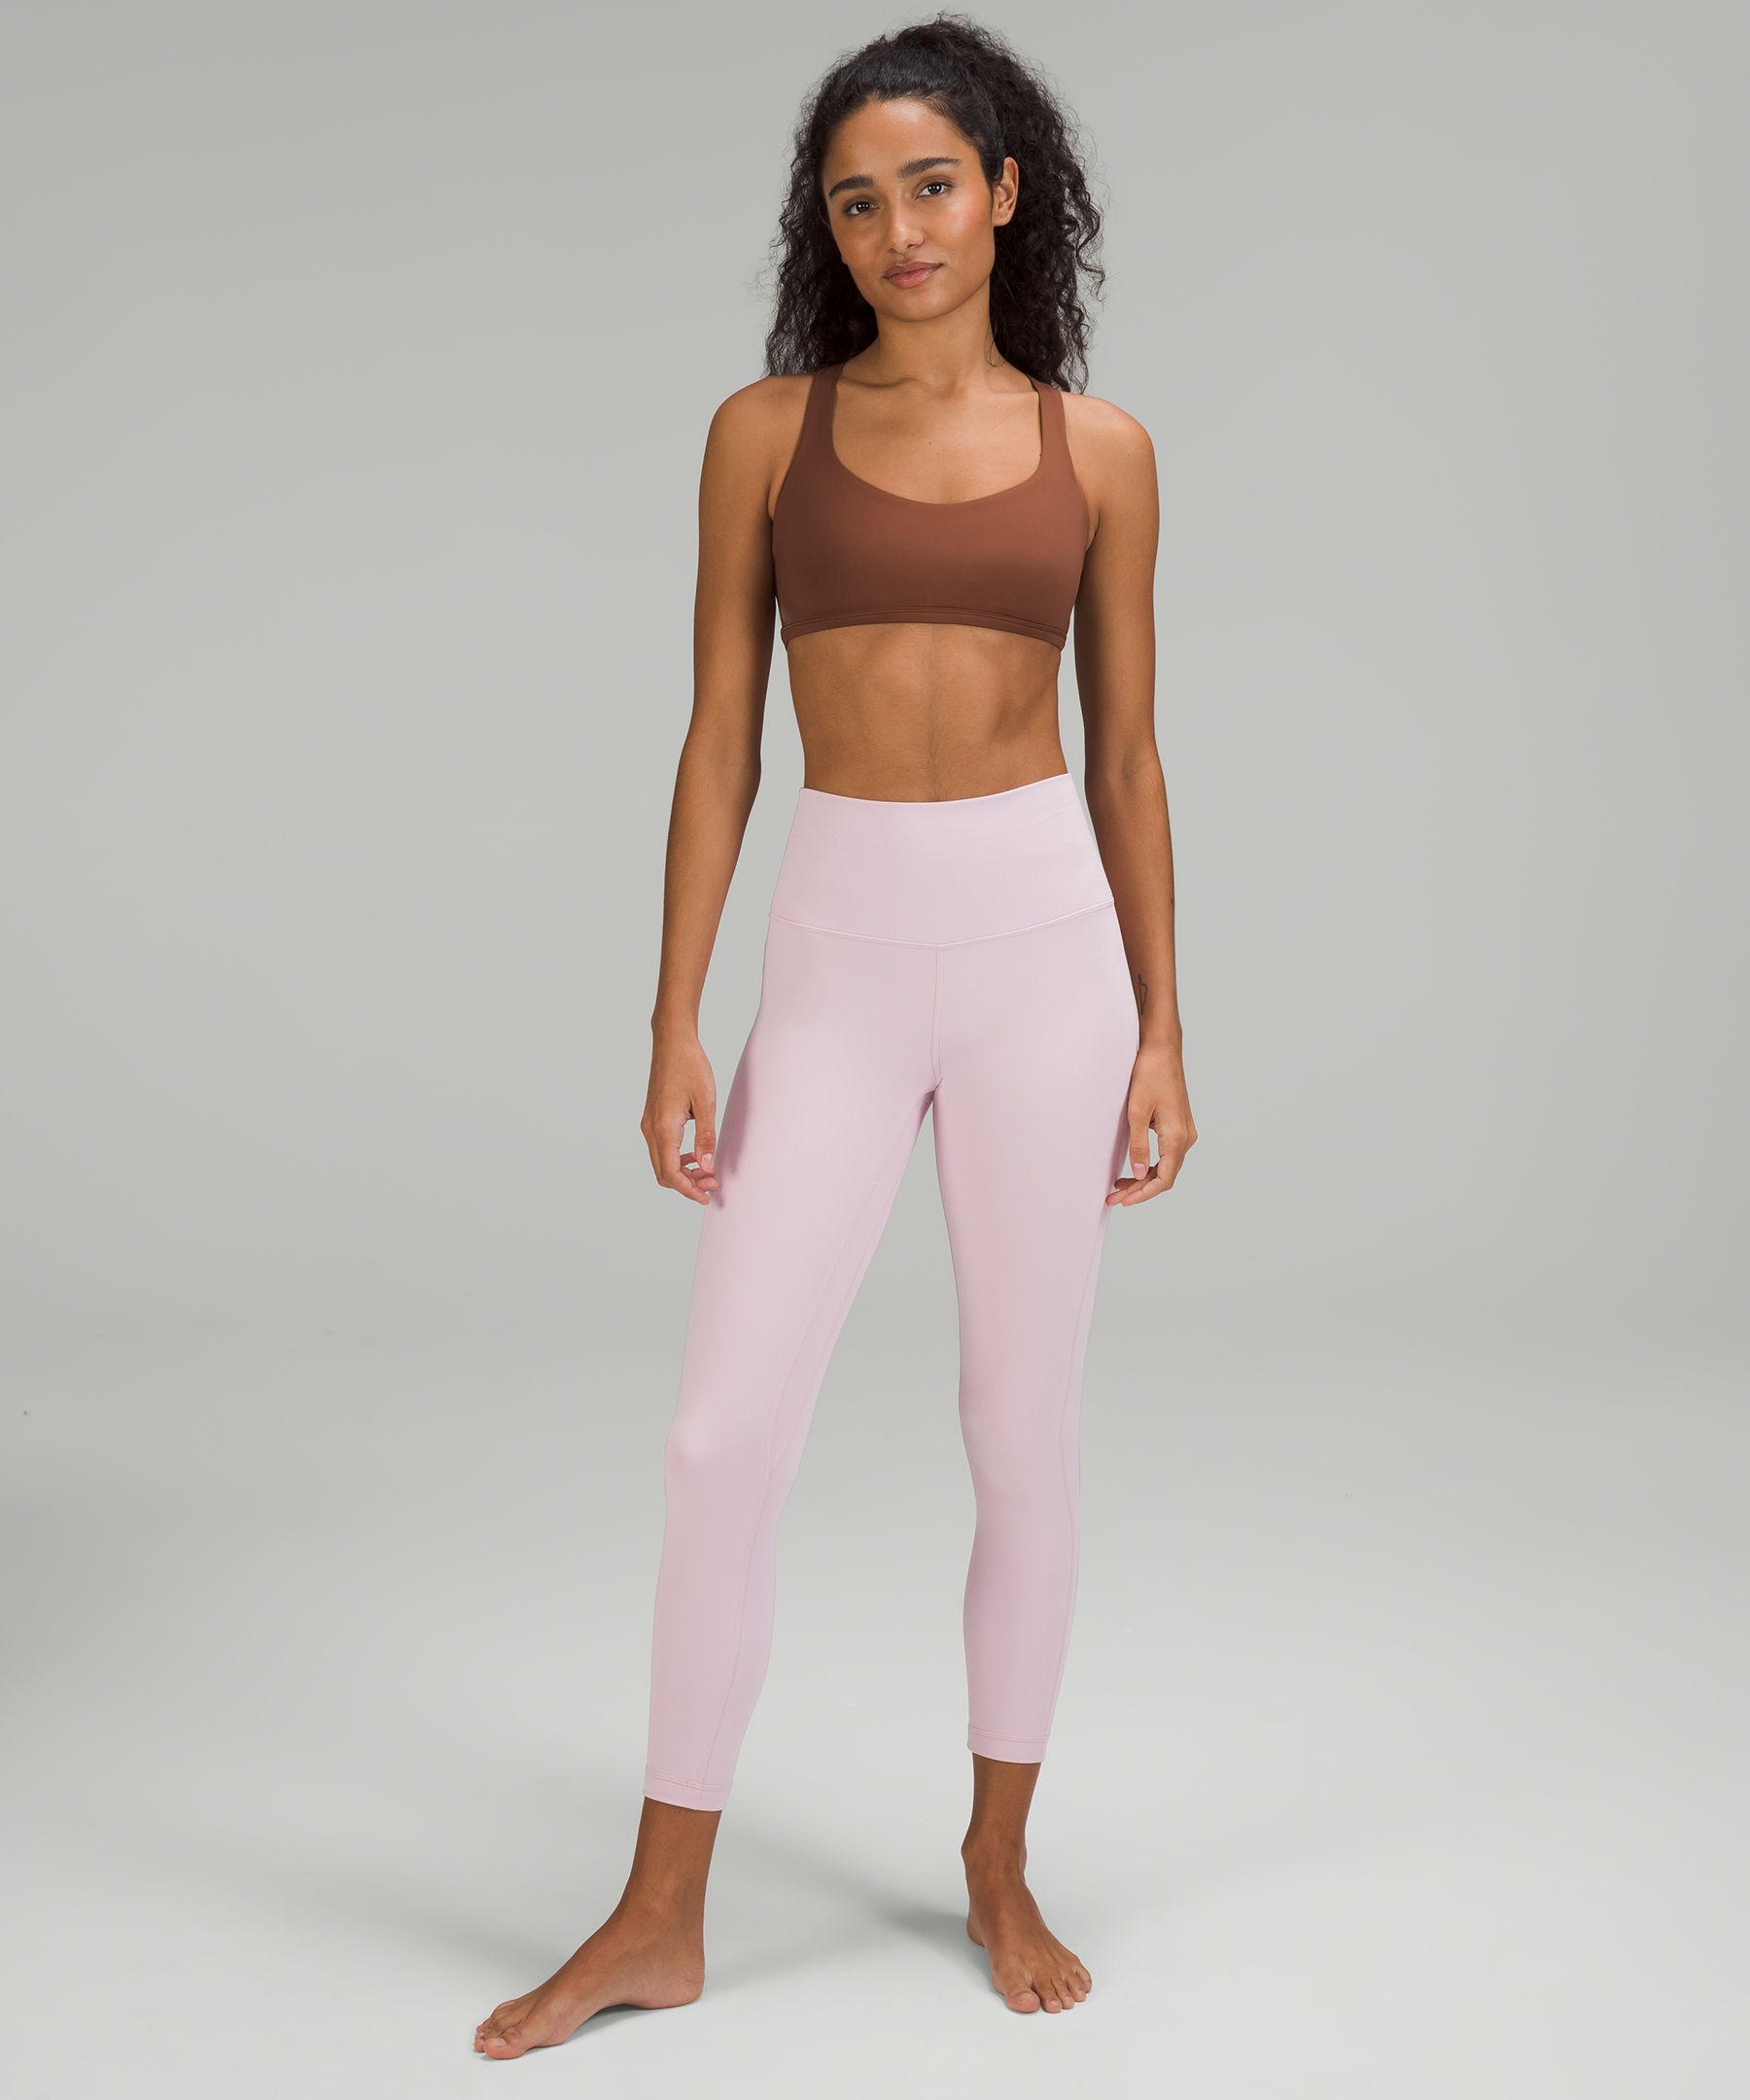 Cabazon Outlet deal today , align leggings $34 ( pink savannah, soleil &  pink blossom multi ) & scuba jogger $39 : r/lululemon